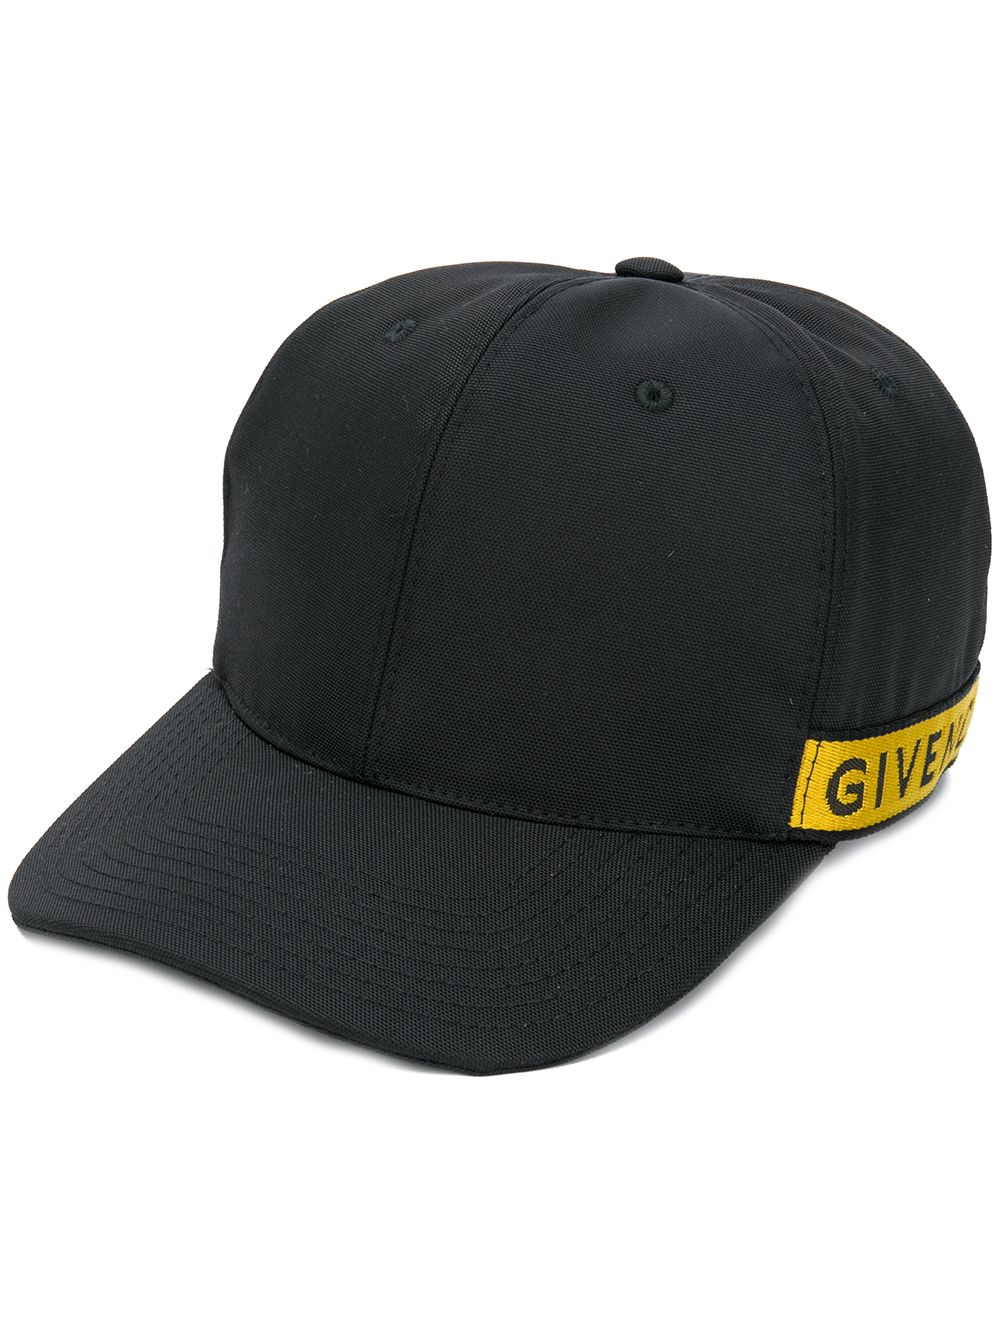 фото Givenchy кепка с логотипом